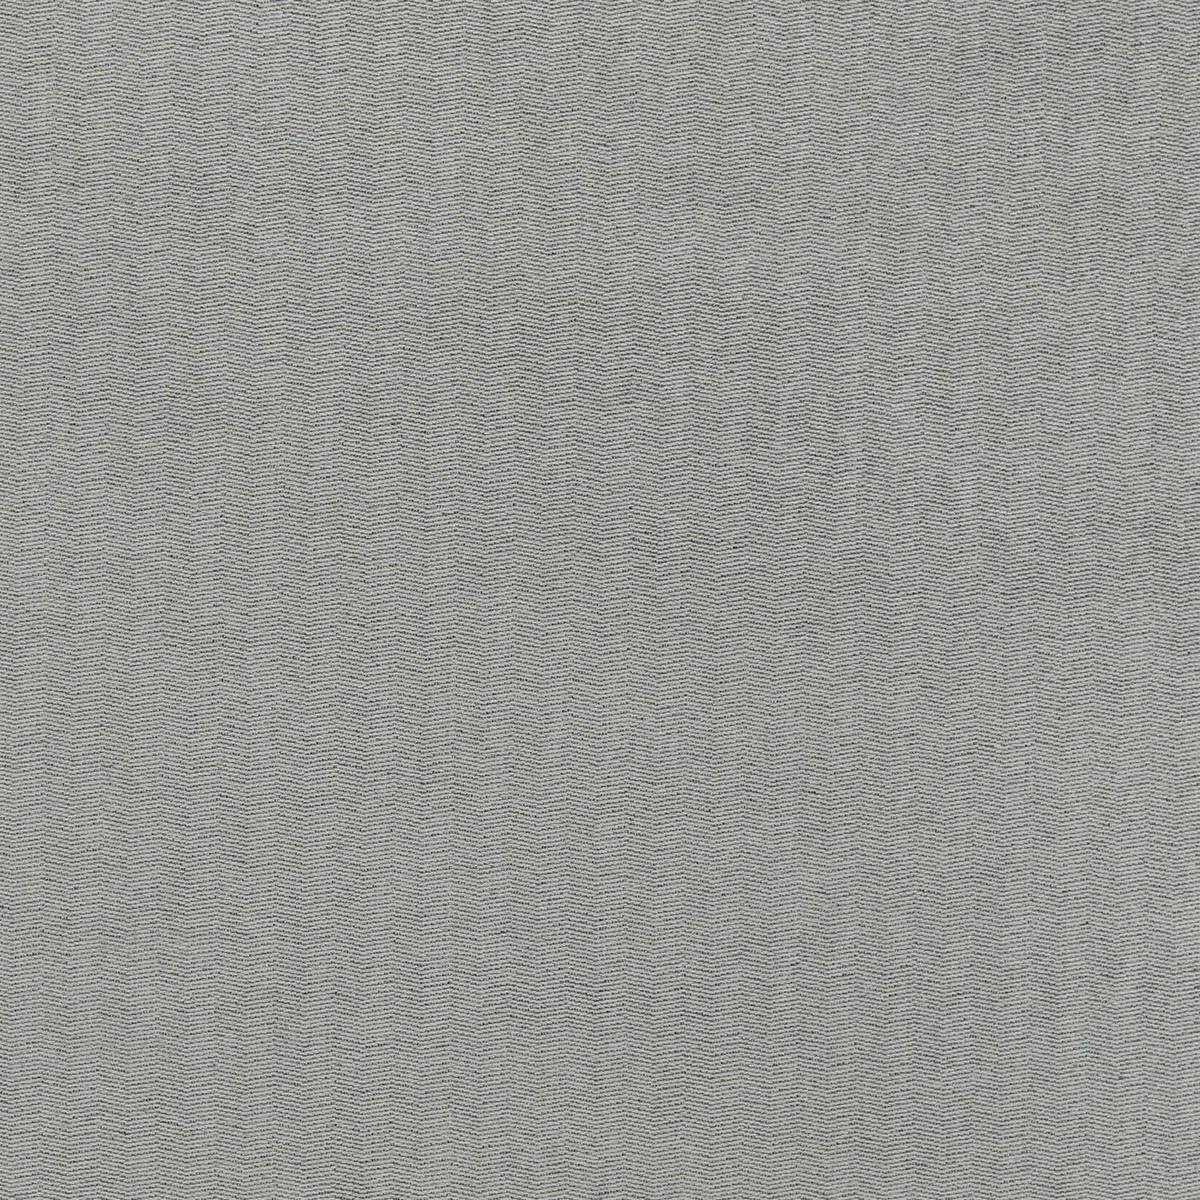 Bespoke Steel Fabric by Harlequin